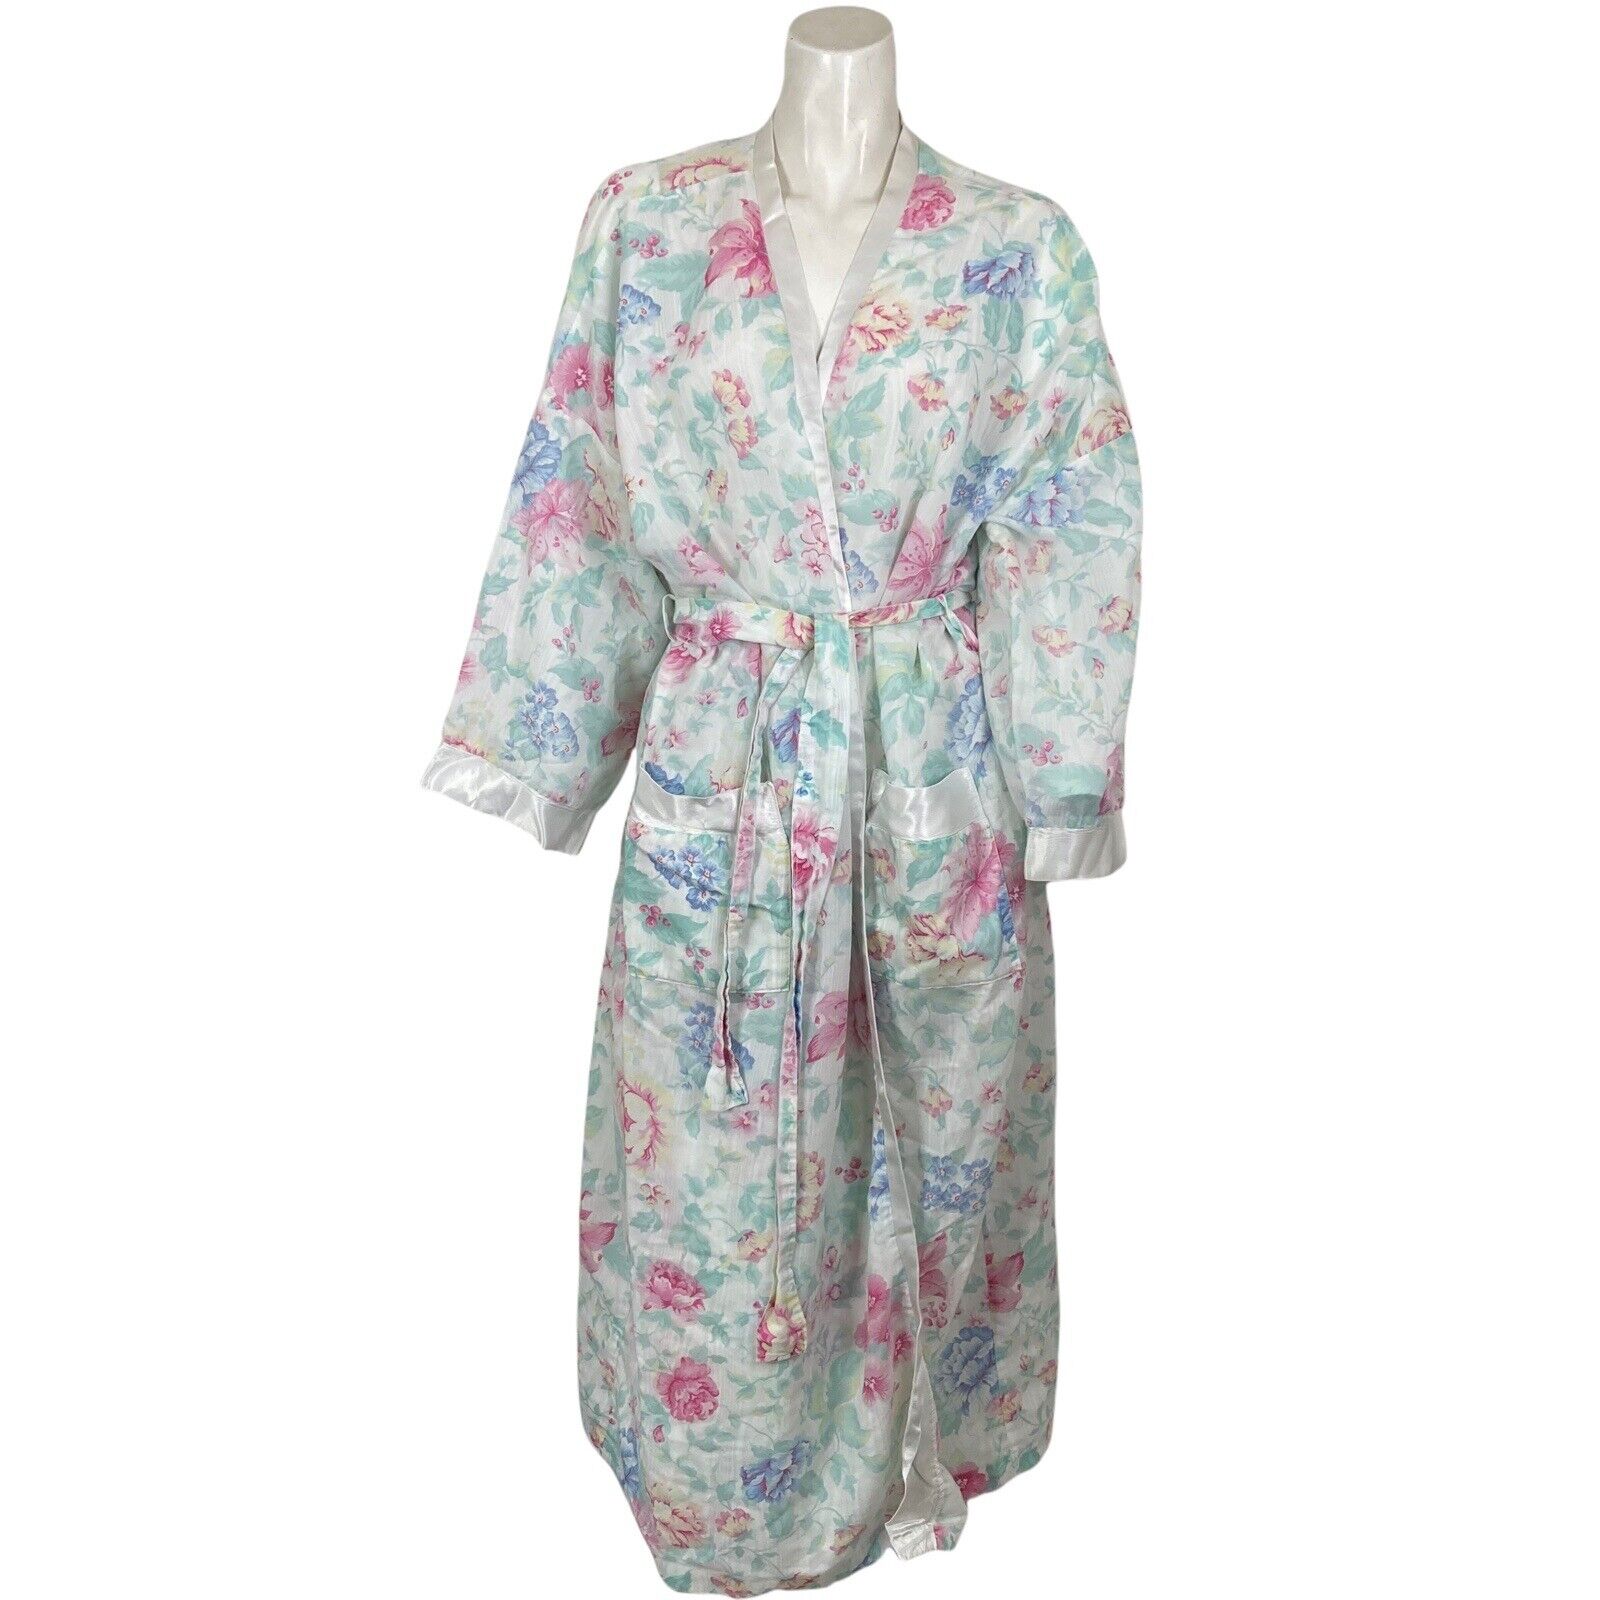 Popular 2021 model shop is the lowest price challenge Vintage Appel Robe Floral Satin Size Large Womens Trim